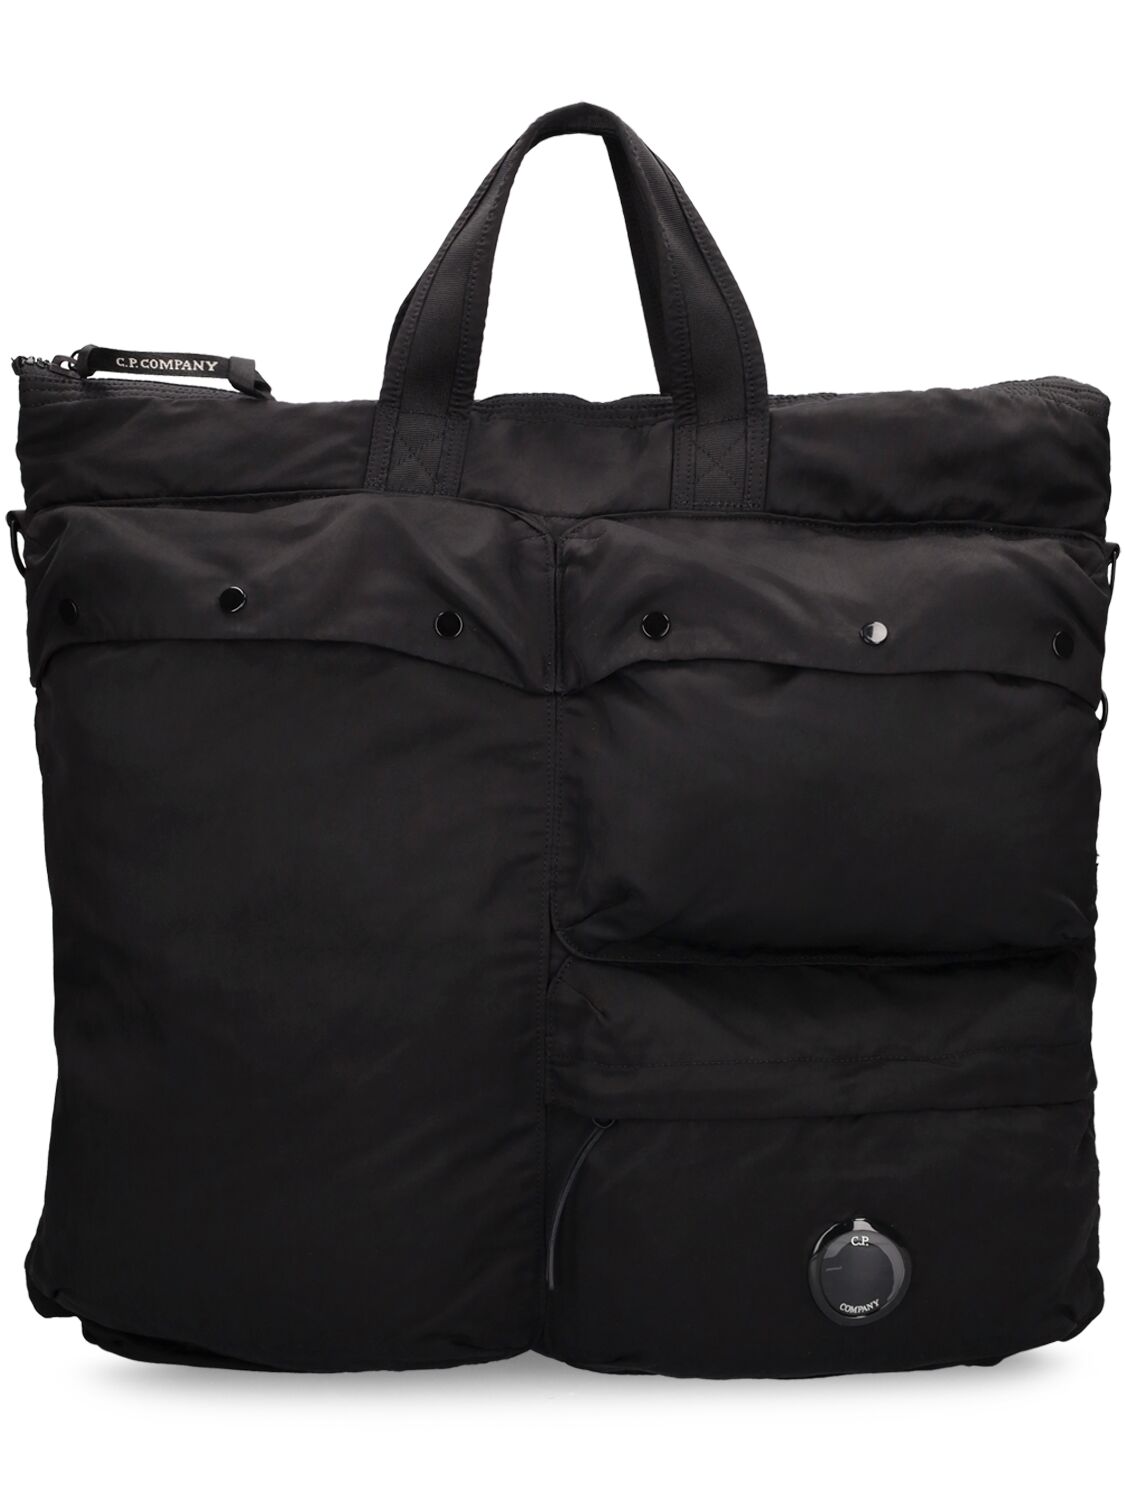 Image of Nylon B Tote Bag